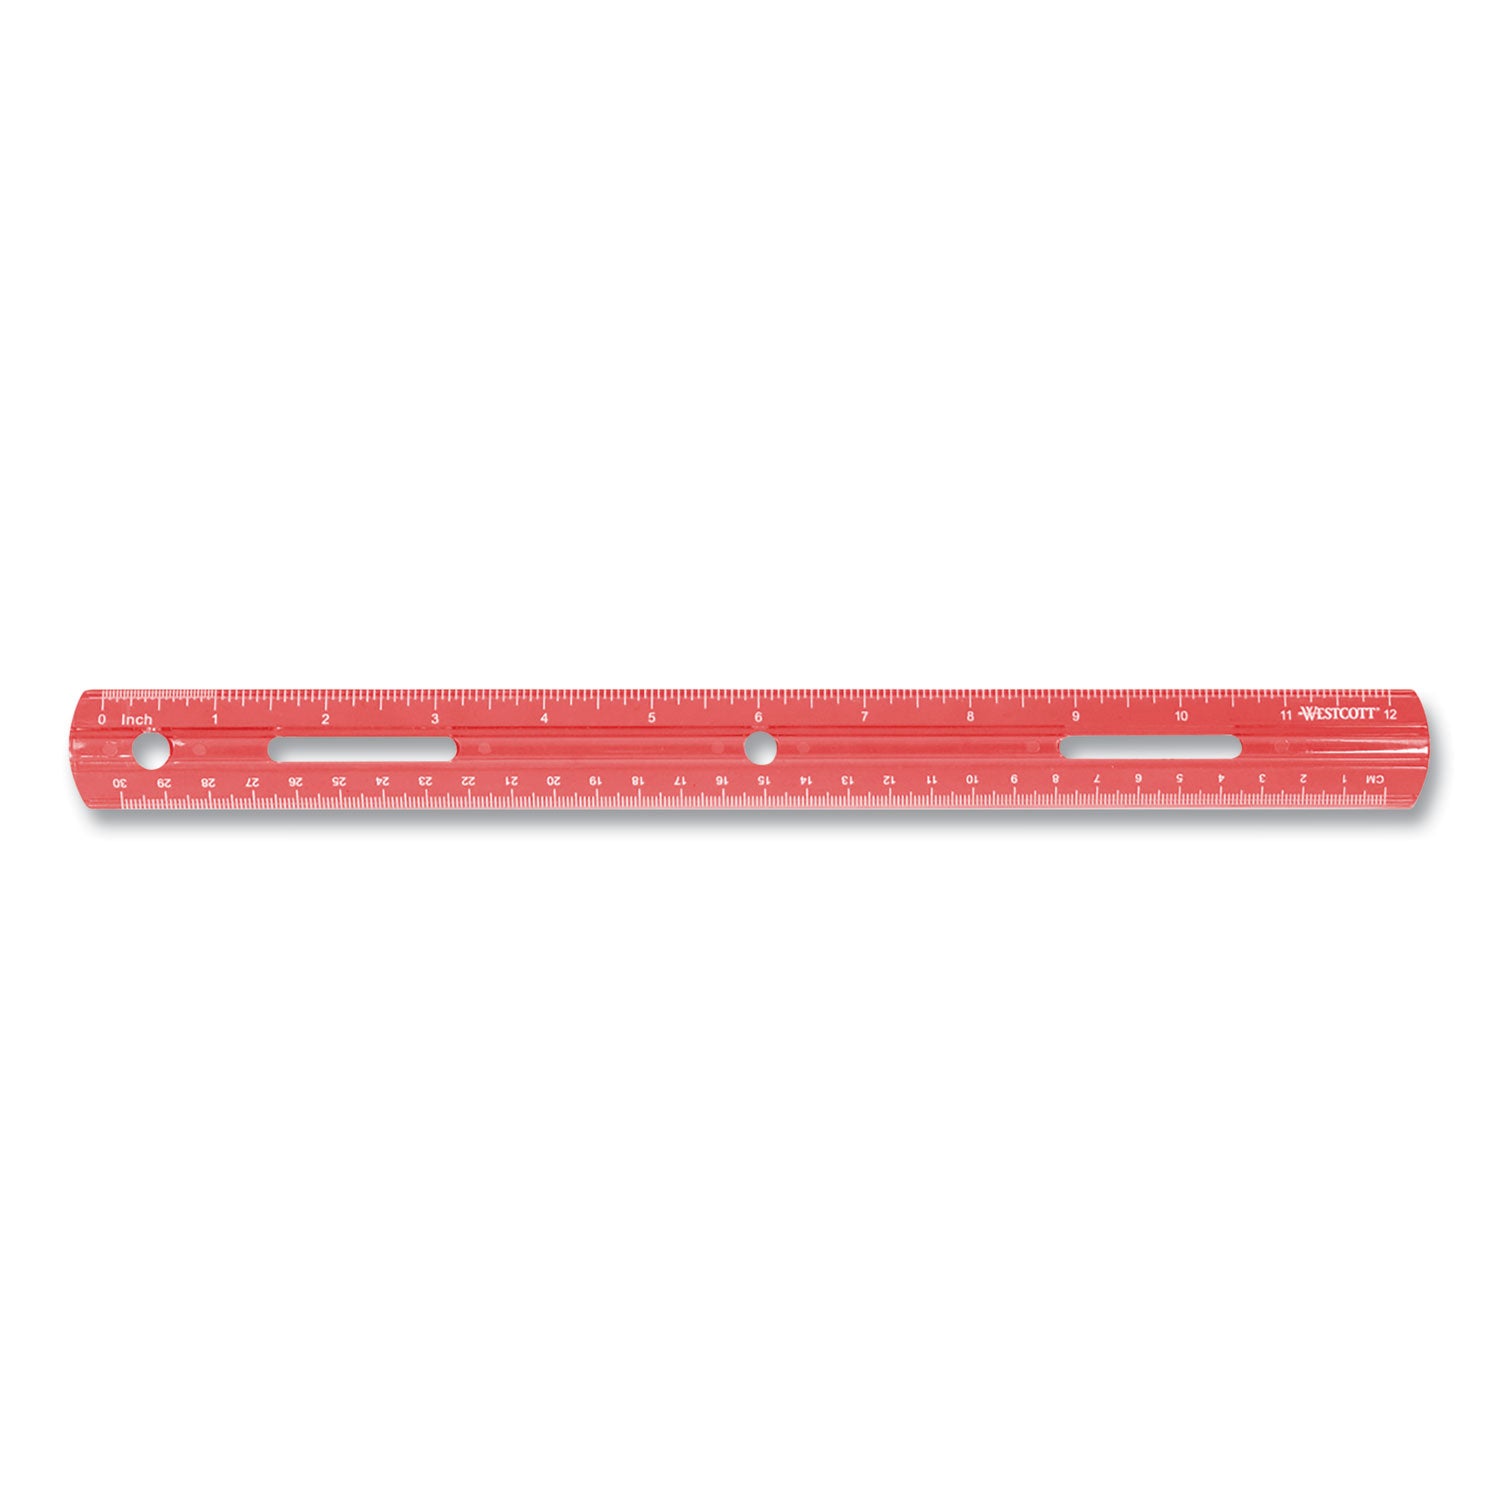 plastic-ruler-standard-metric-12-30-cm-long-assorted-translucent-colors_acm17722 - 3